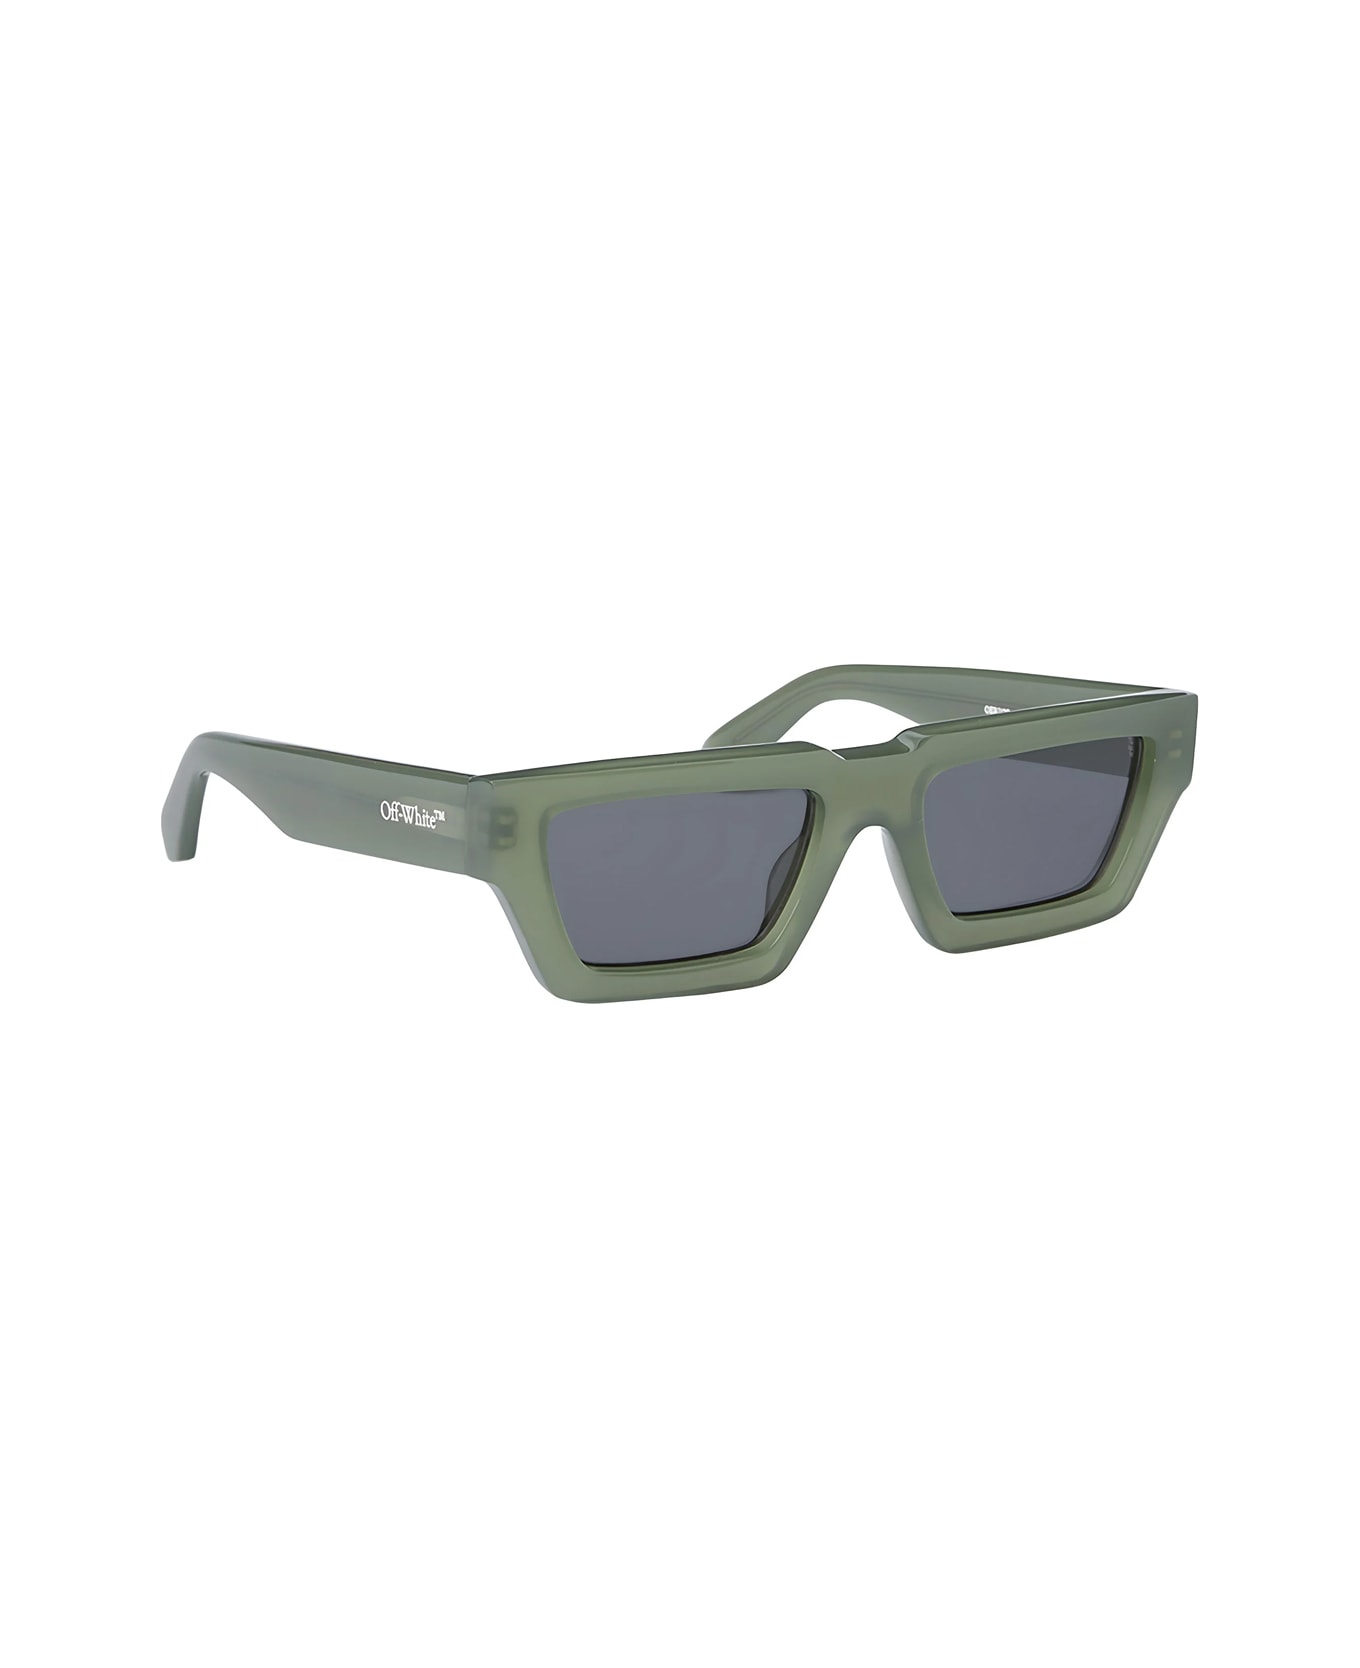 Off-White Oeri129 Manchester 5707 Sage Green Sunglasses - Verde サングラス